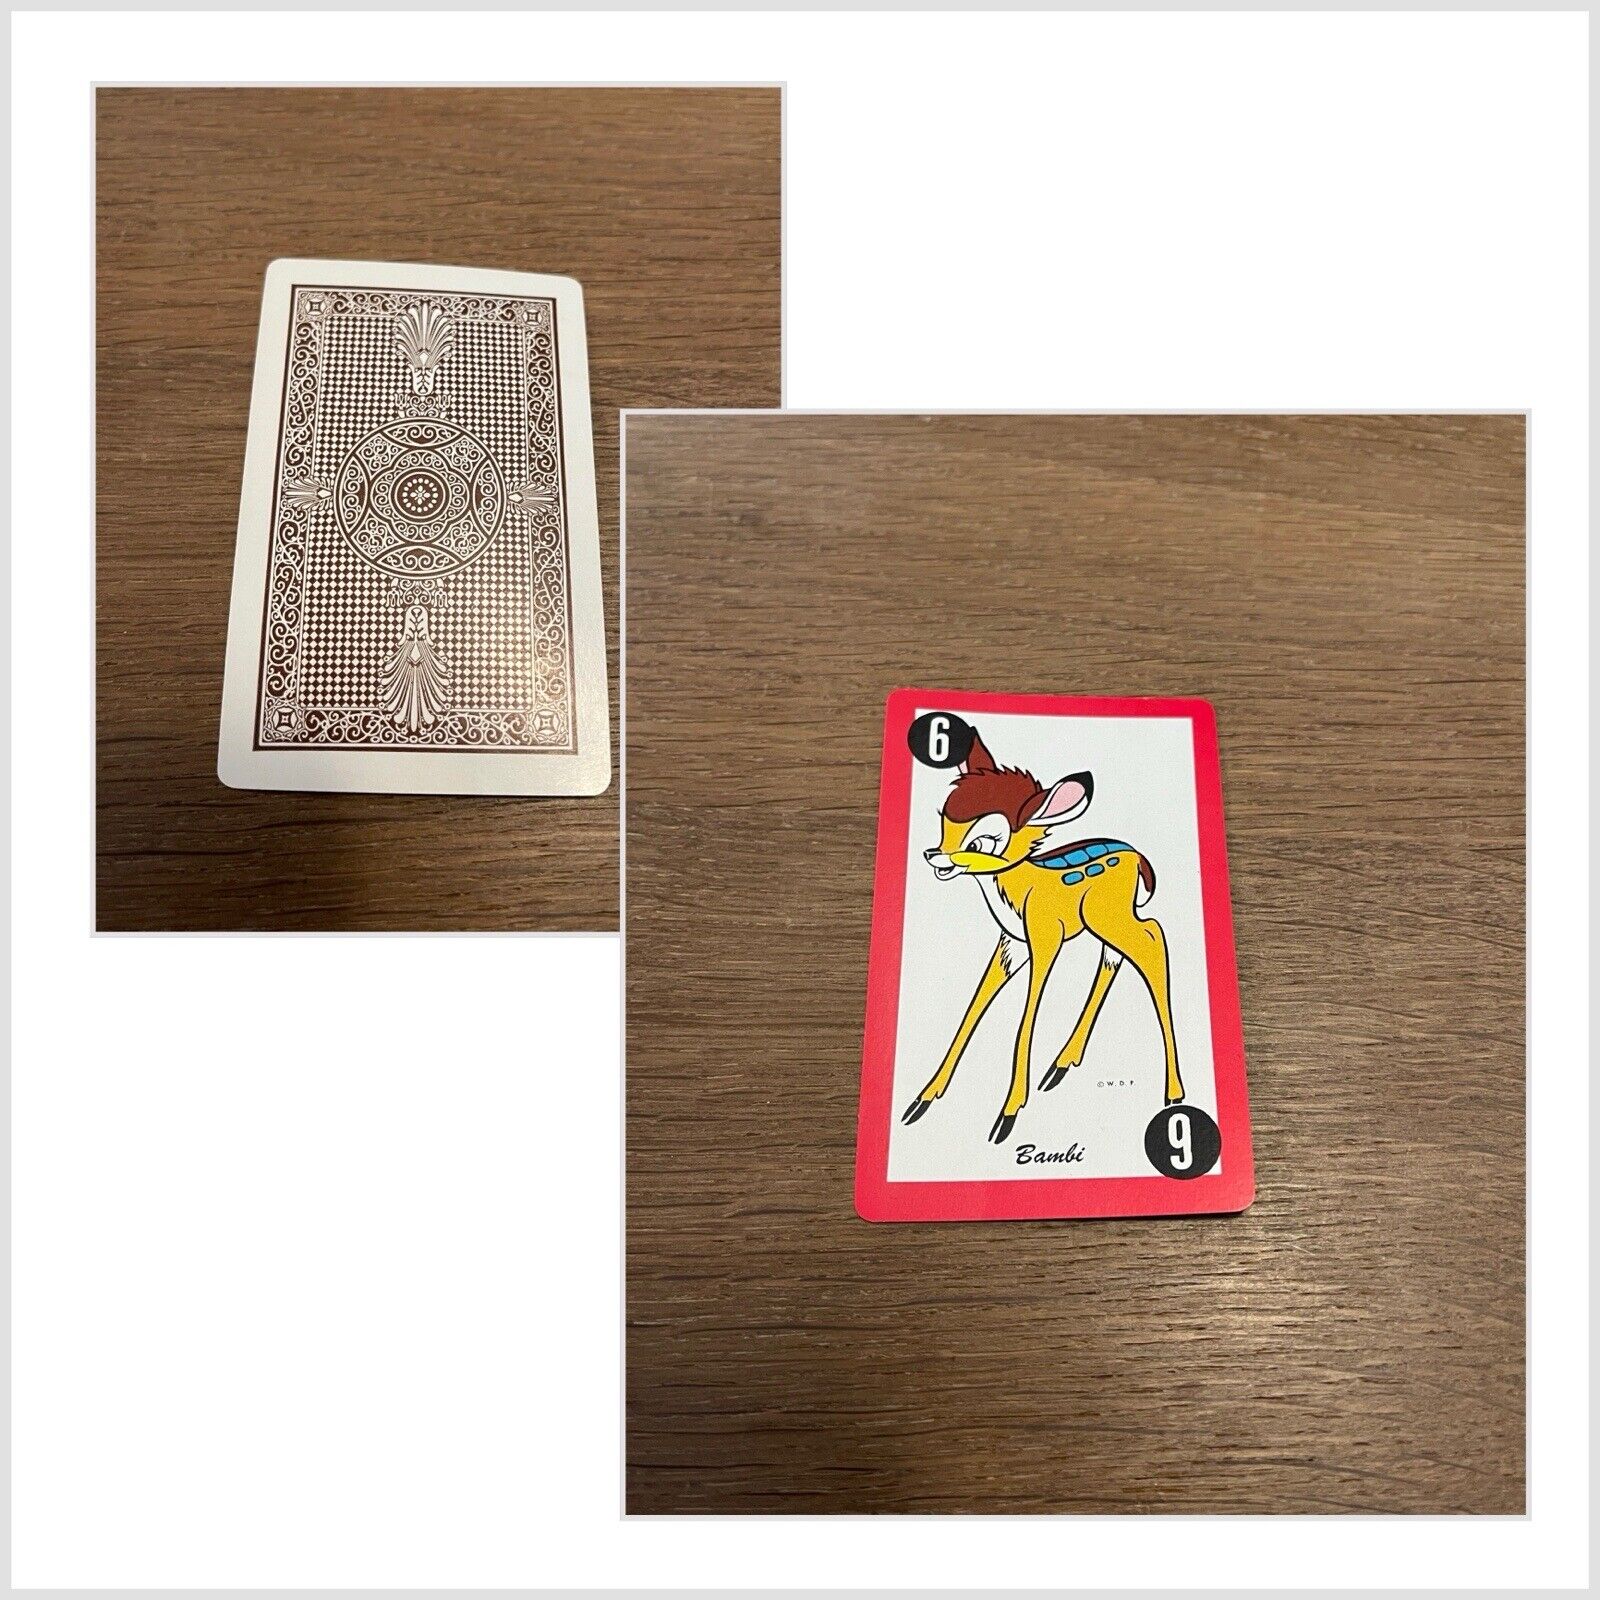 RARE VINTAGE 1949 WHITMAN DISNEY DONALD DUCK PLAYING CARD GAME BAMBI CARD